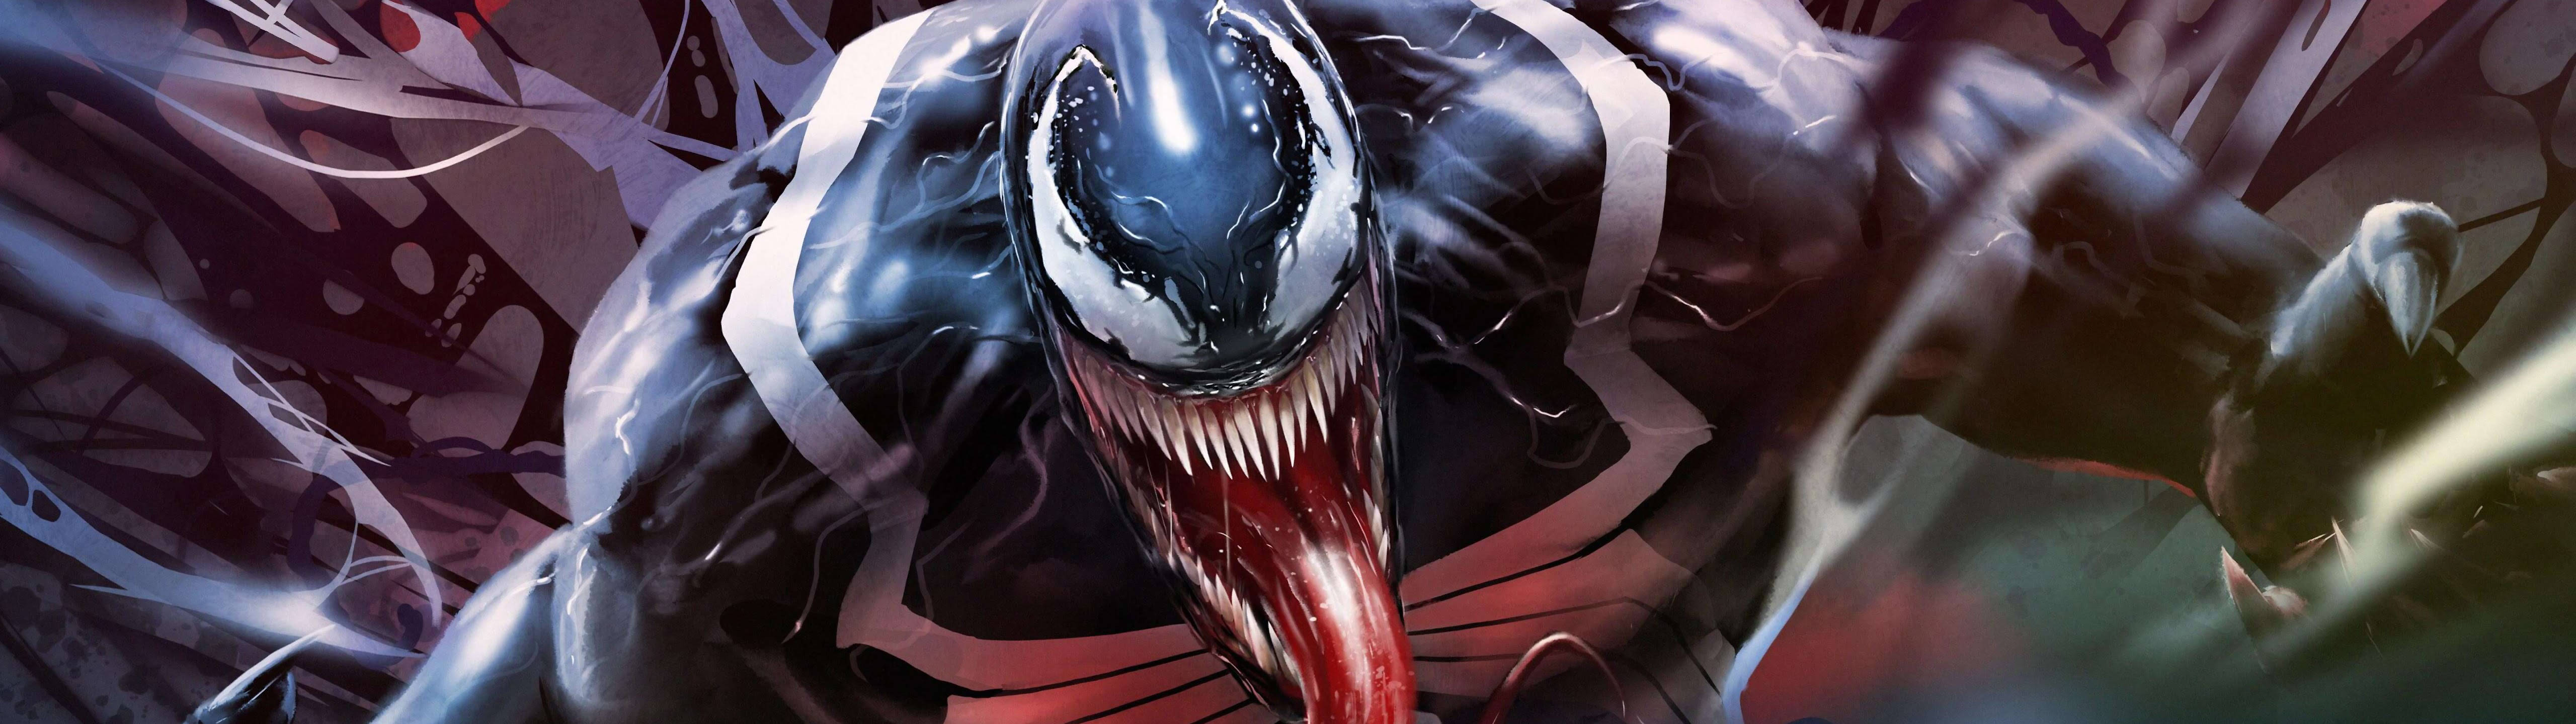 Marvel Antihero Venom 5120 X 1440 Wallpaper